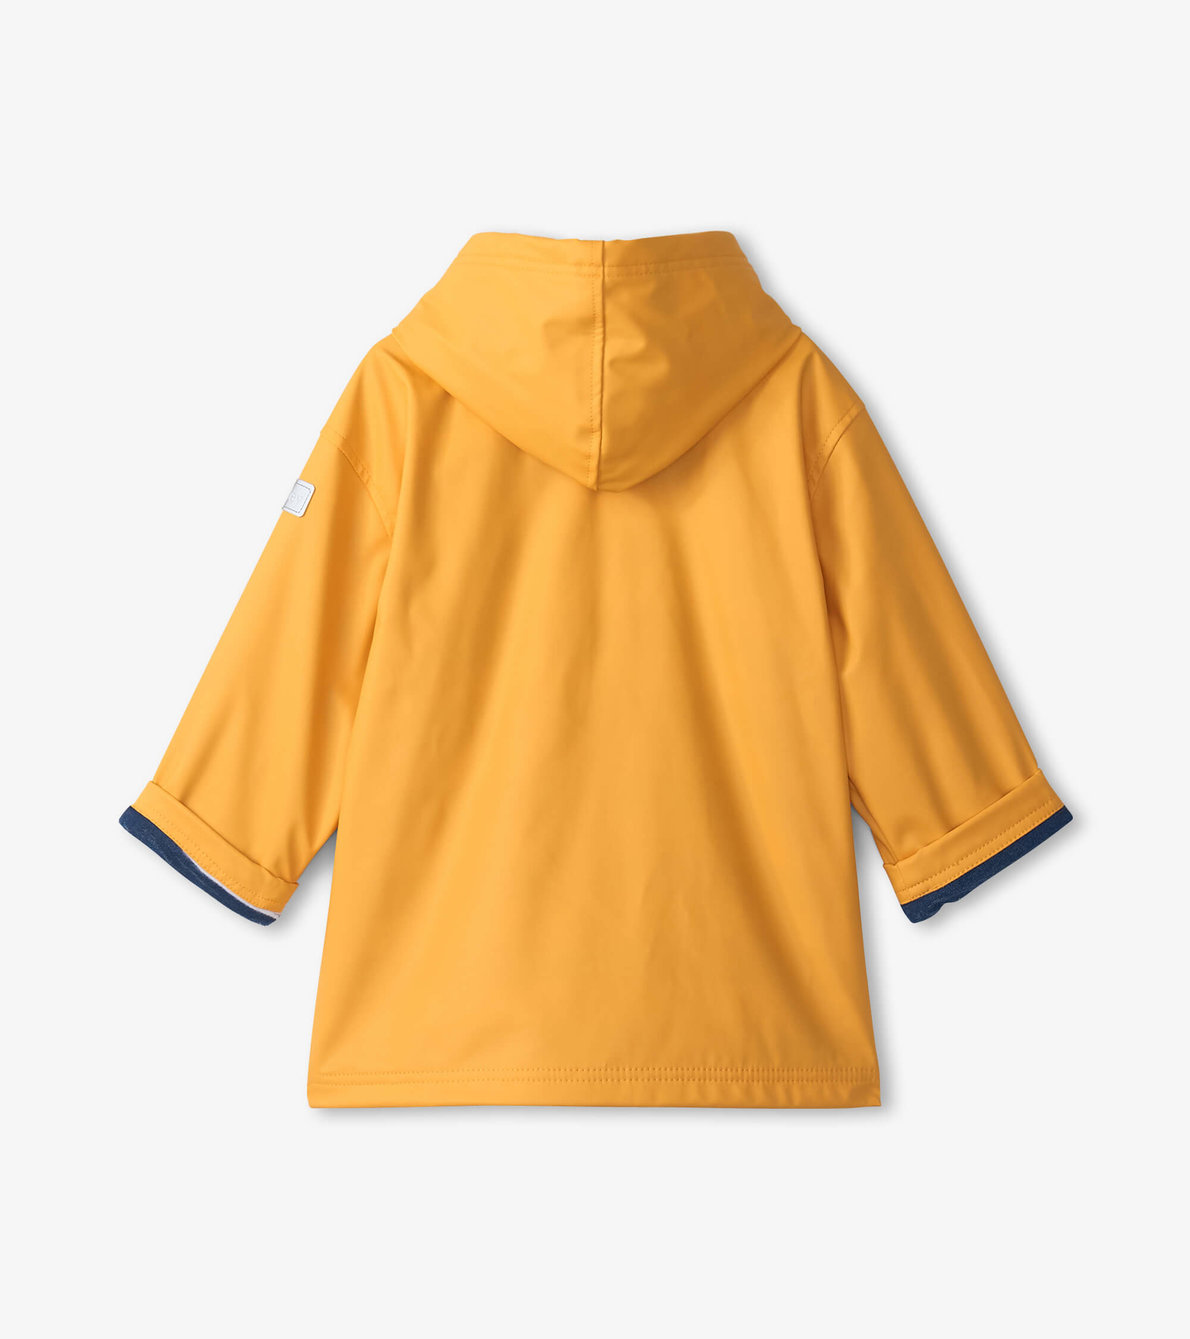 View larger image of Yellow With Navy Stripe Lining Splash Jacket